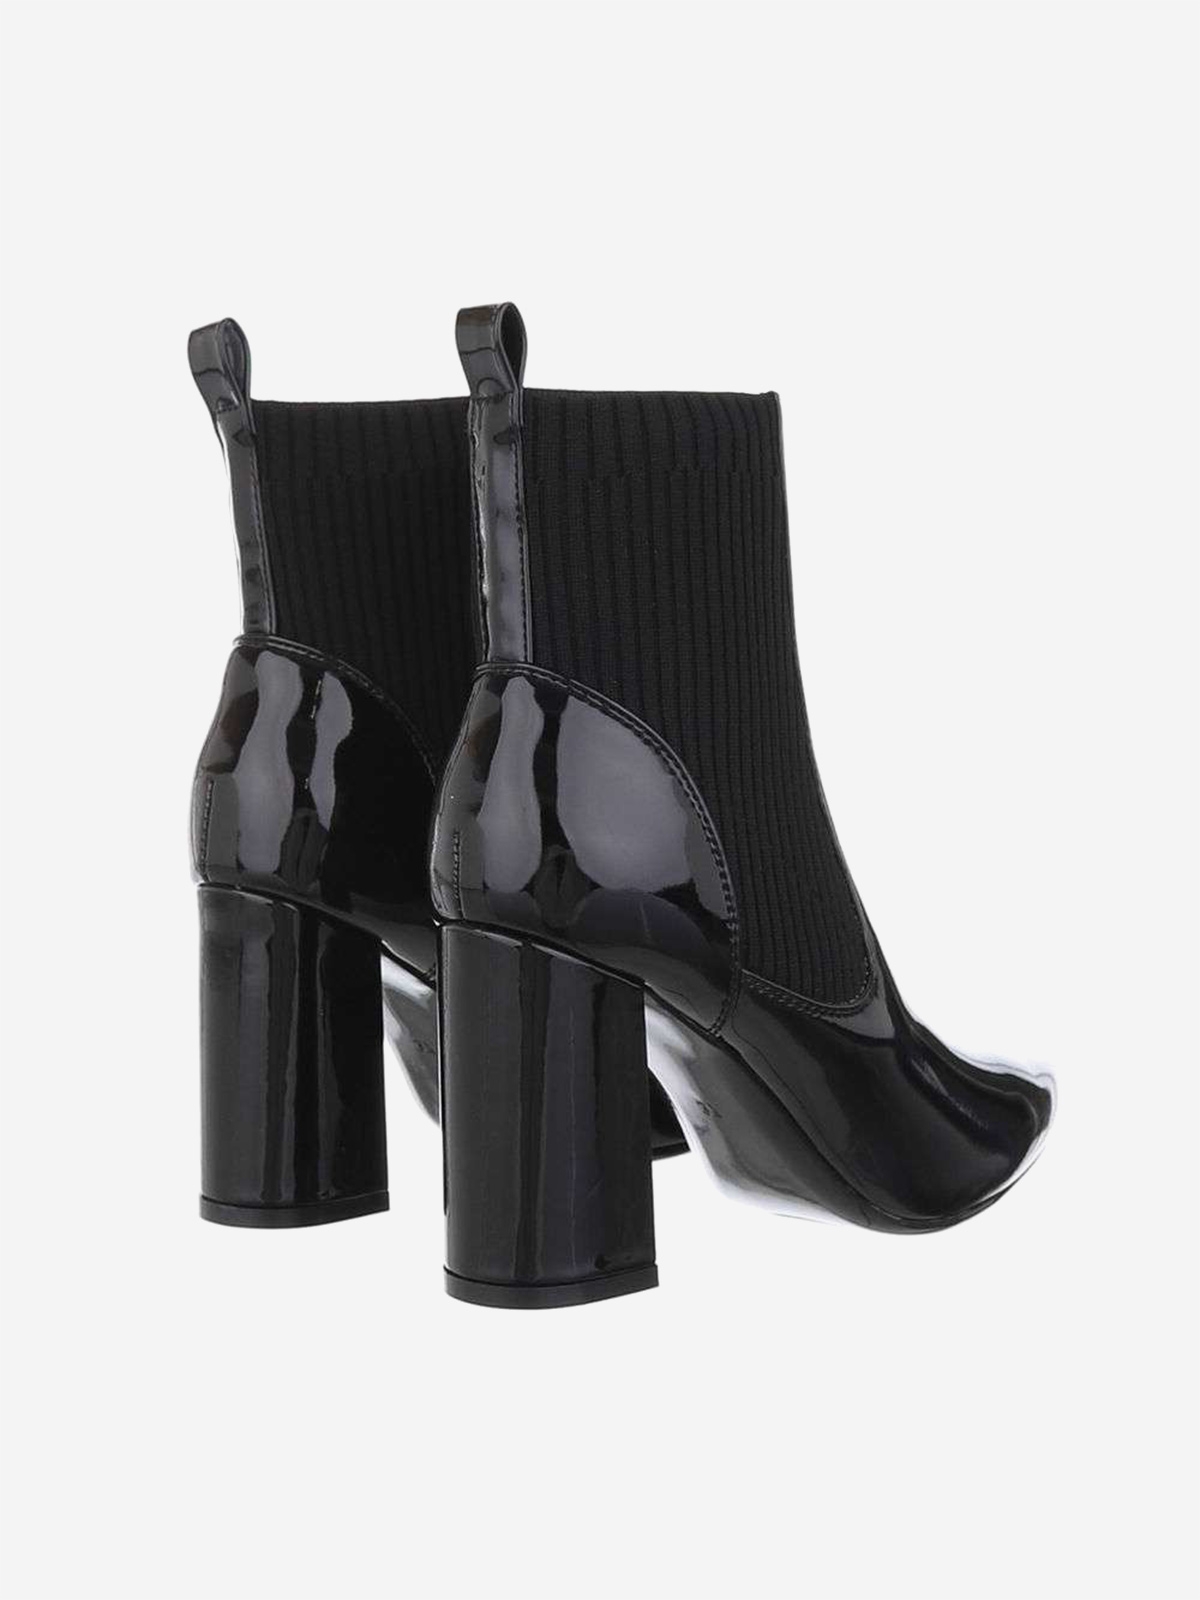 Women's pointed toe high heels 'Kelly' in black